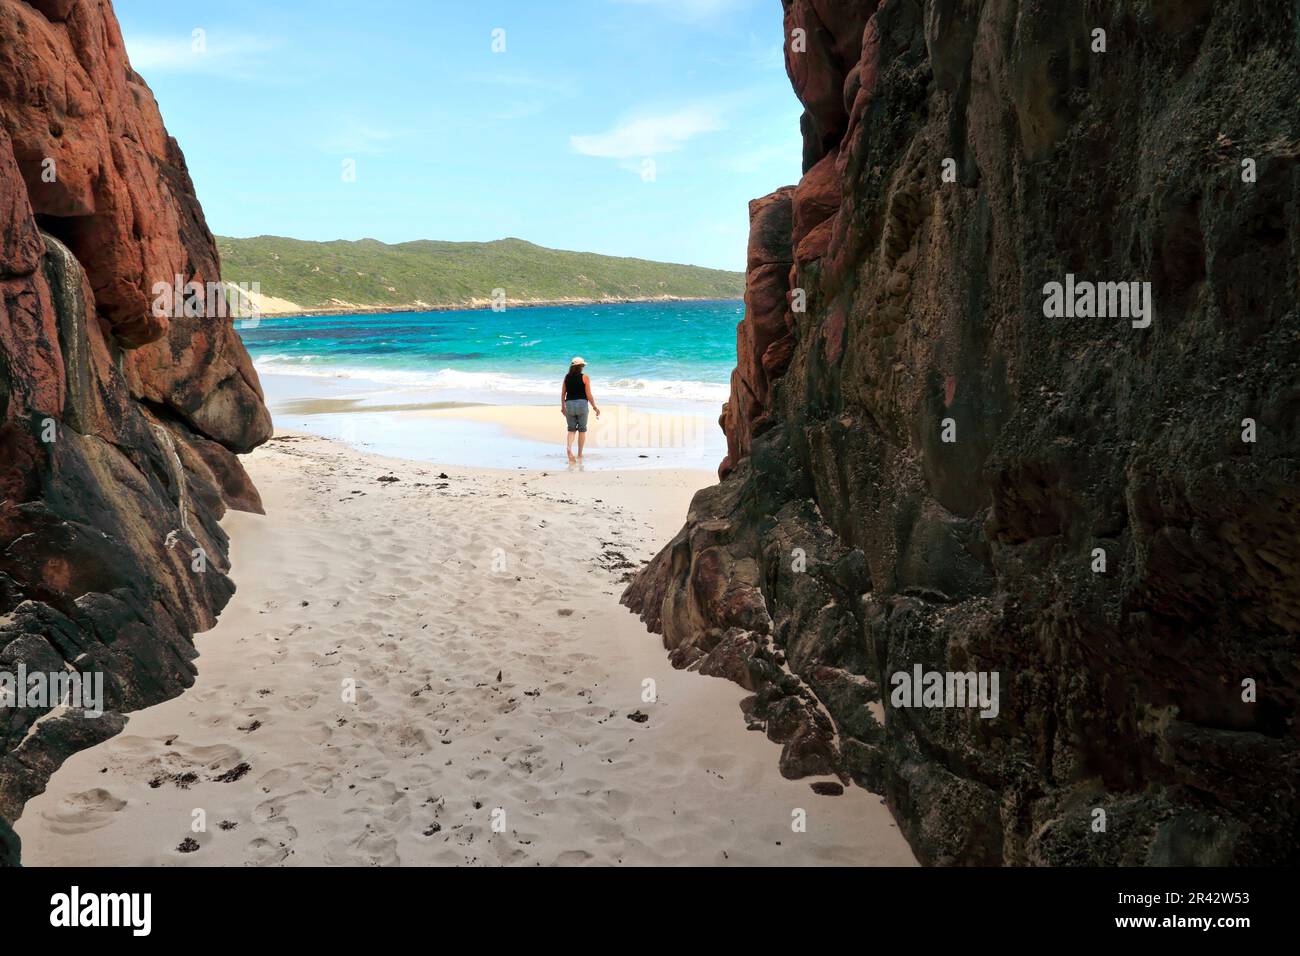 Woman walking on a sandy beach coastline, Cape Hamelin, Southwest Australia Stock Photo